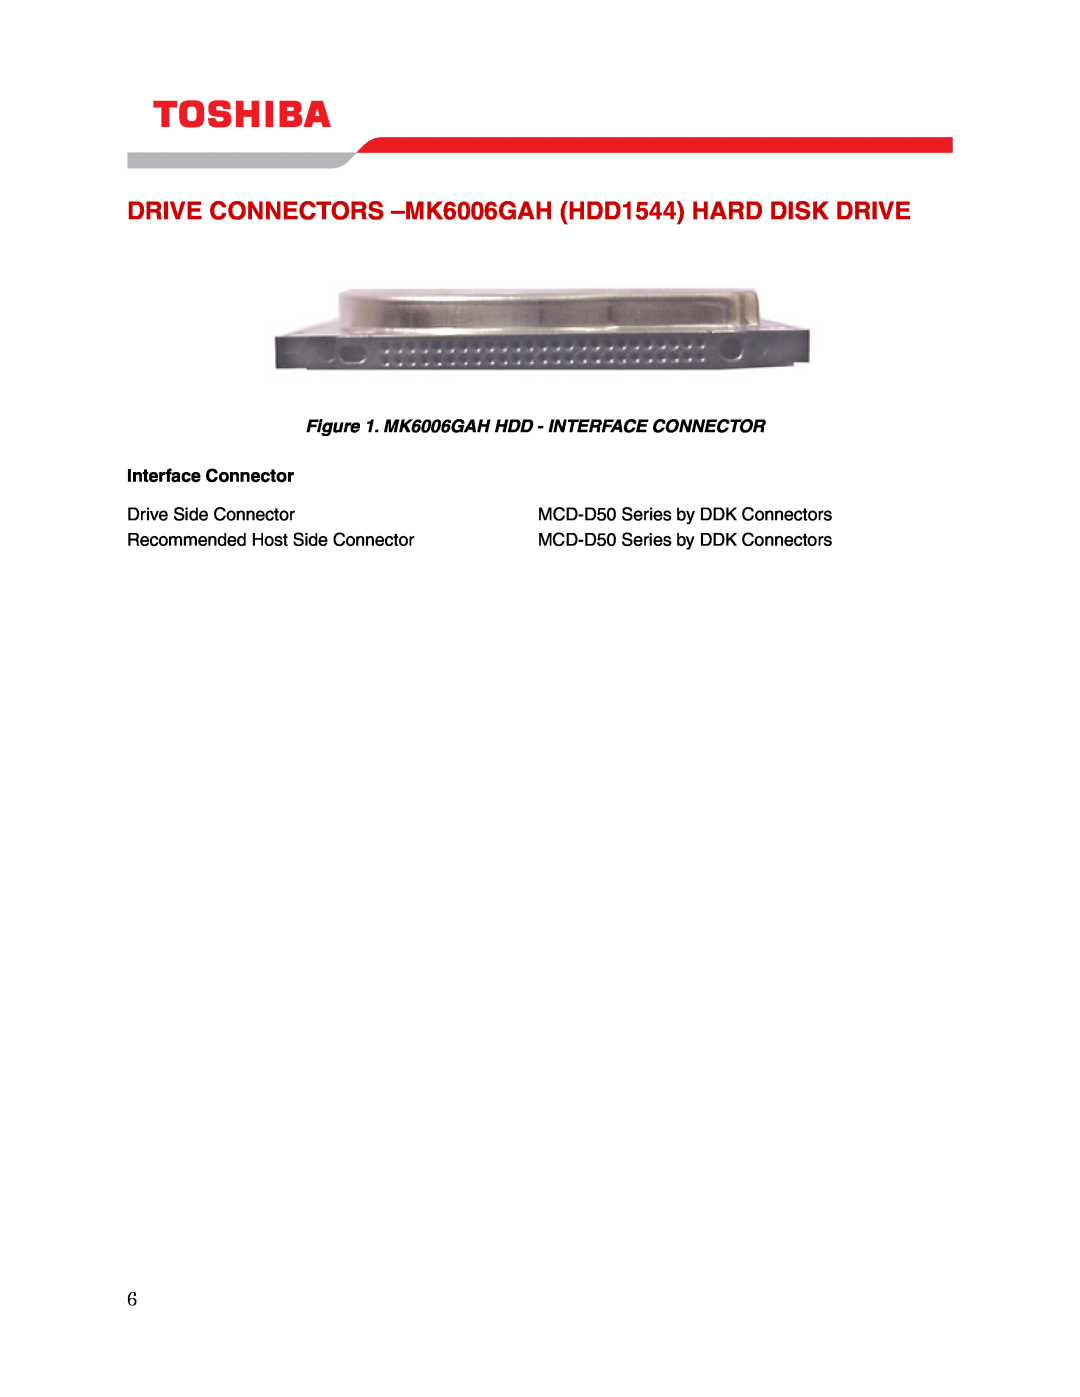 Toshiba DRIVE CONNECTORS -MK6006GAH HDD1544 HARD DISK DRIVE, MK6006GAH HDD - INTERFACE CONNECTOR, Interface Connector 